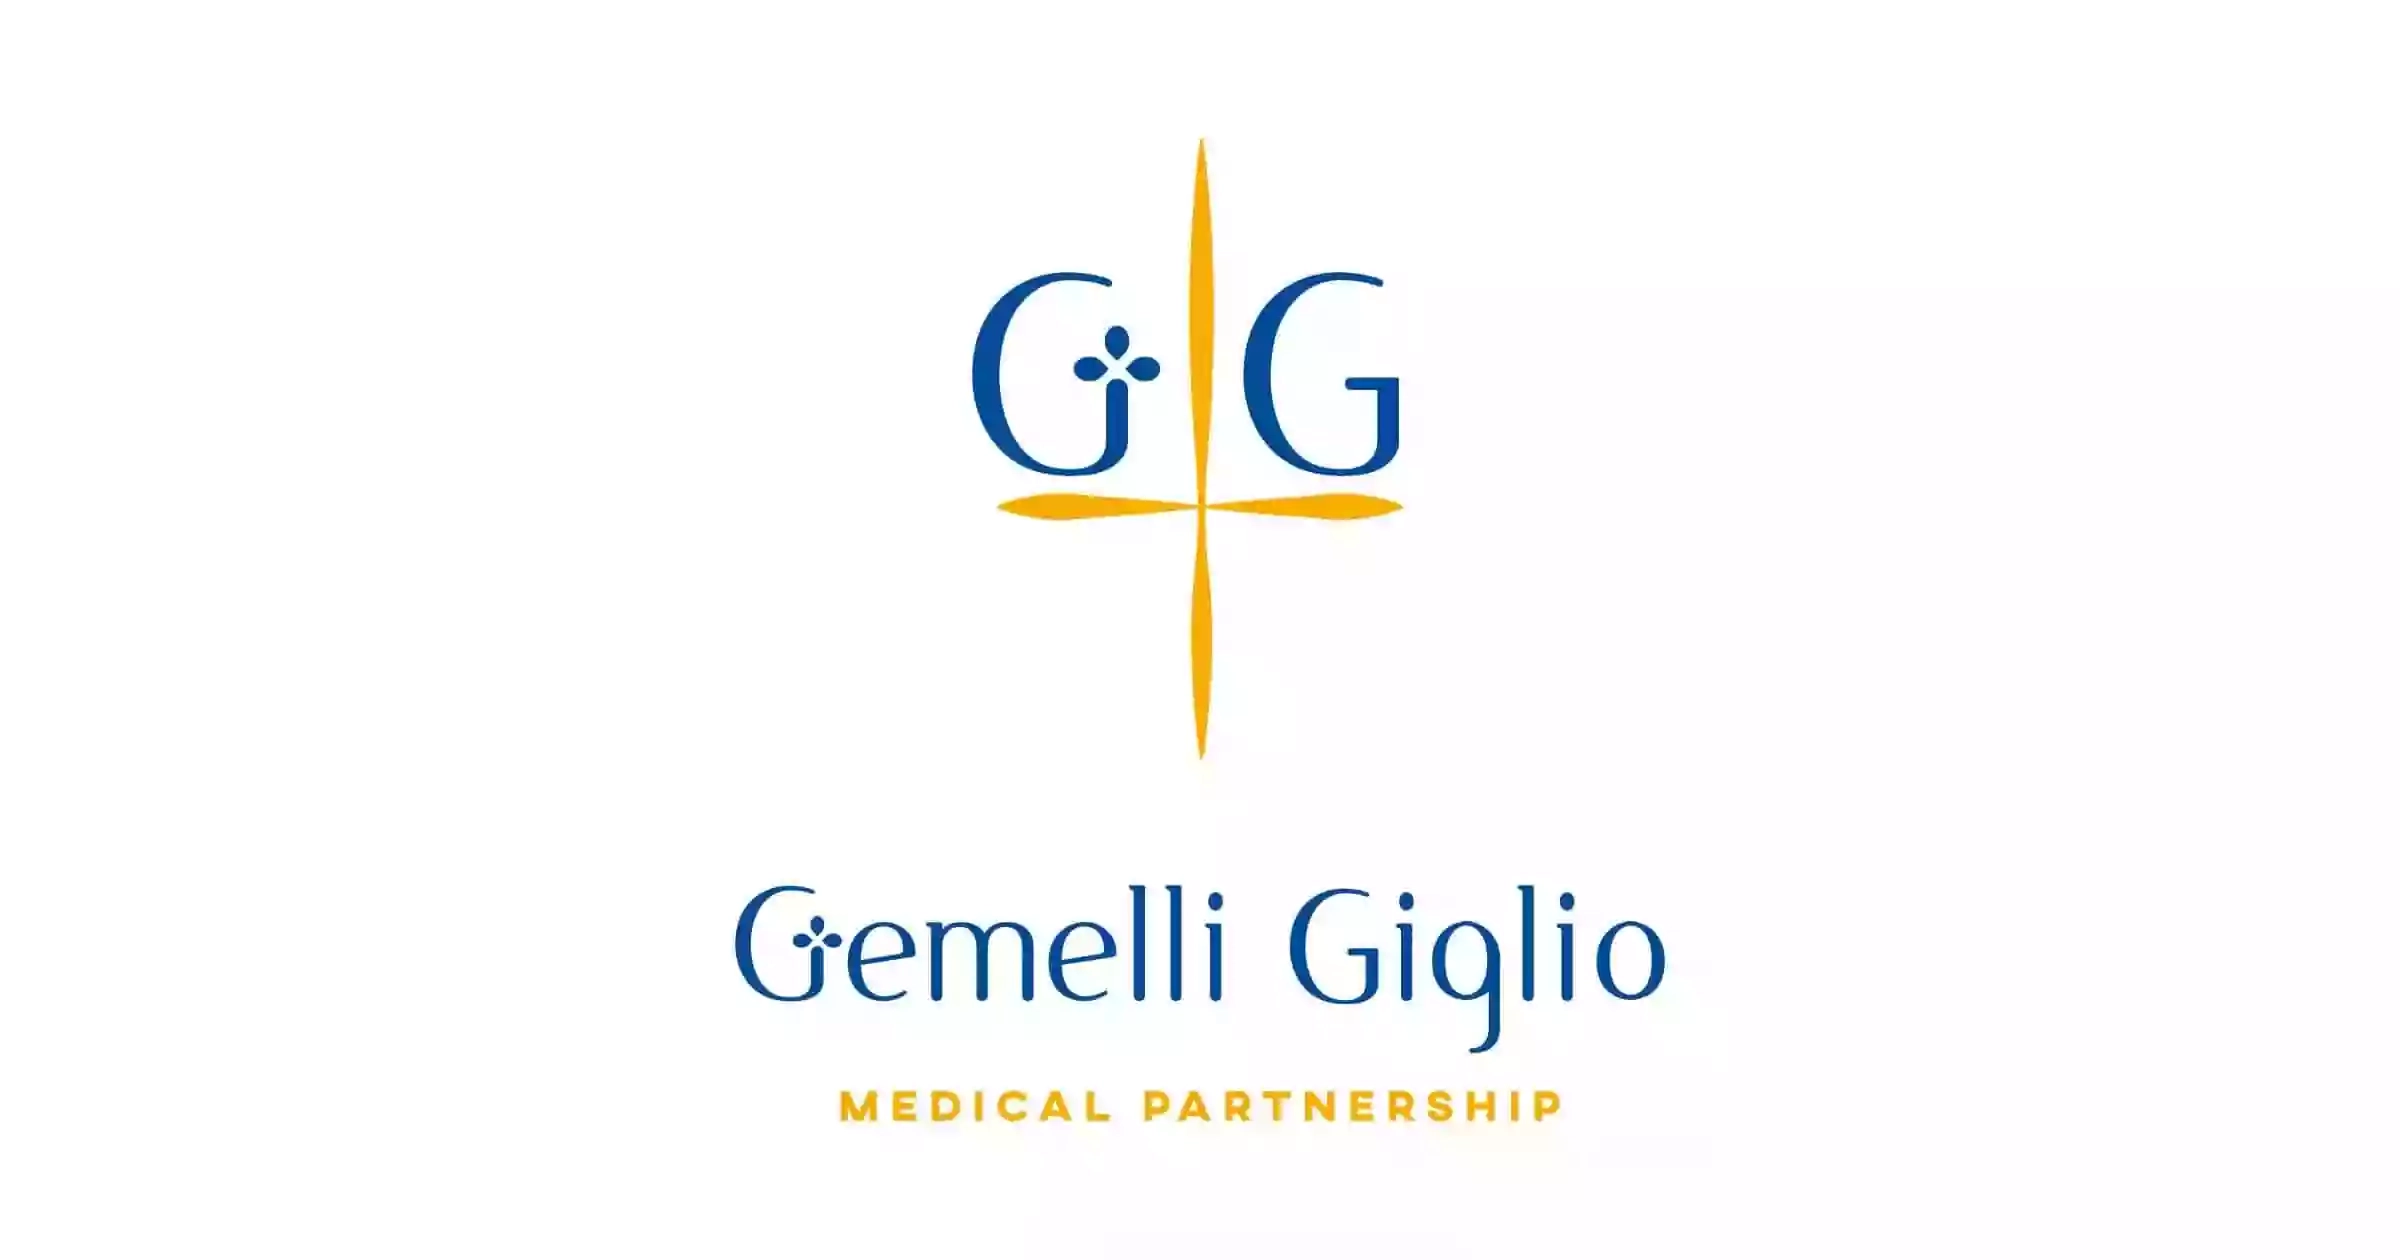 Gemelli Giglio - Medical Partnership